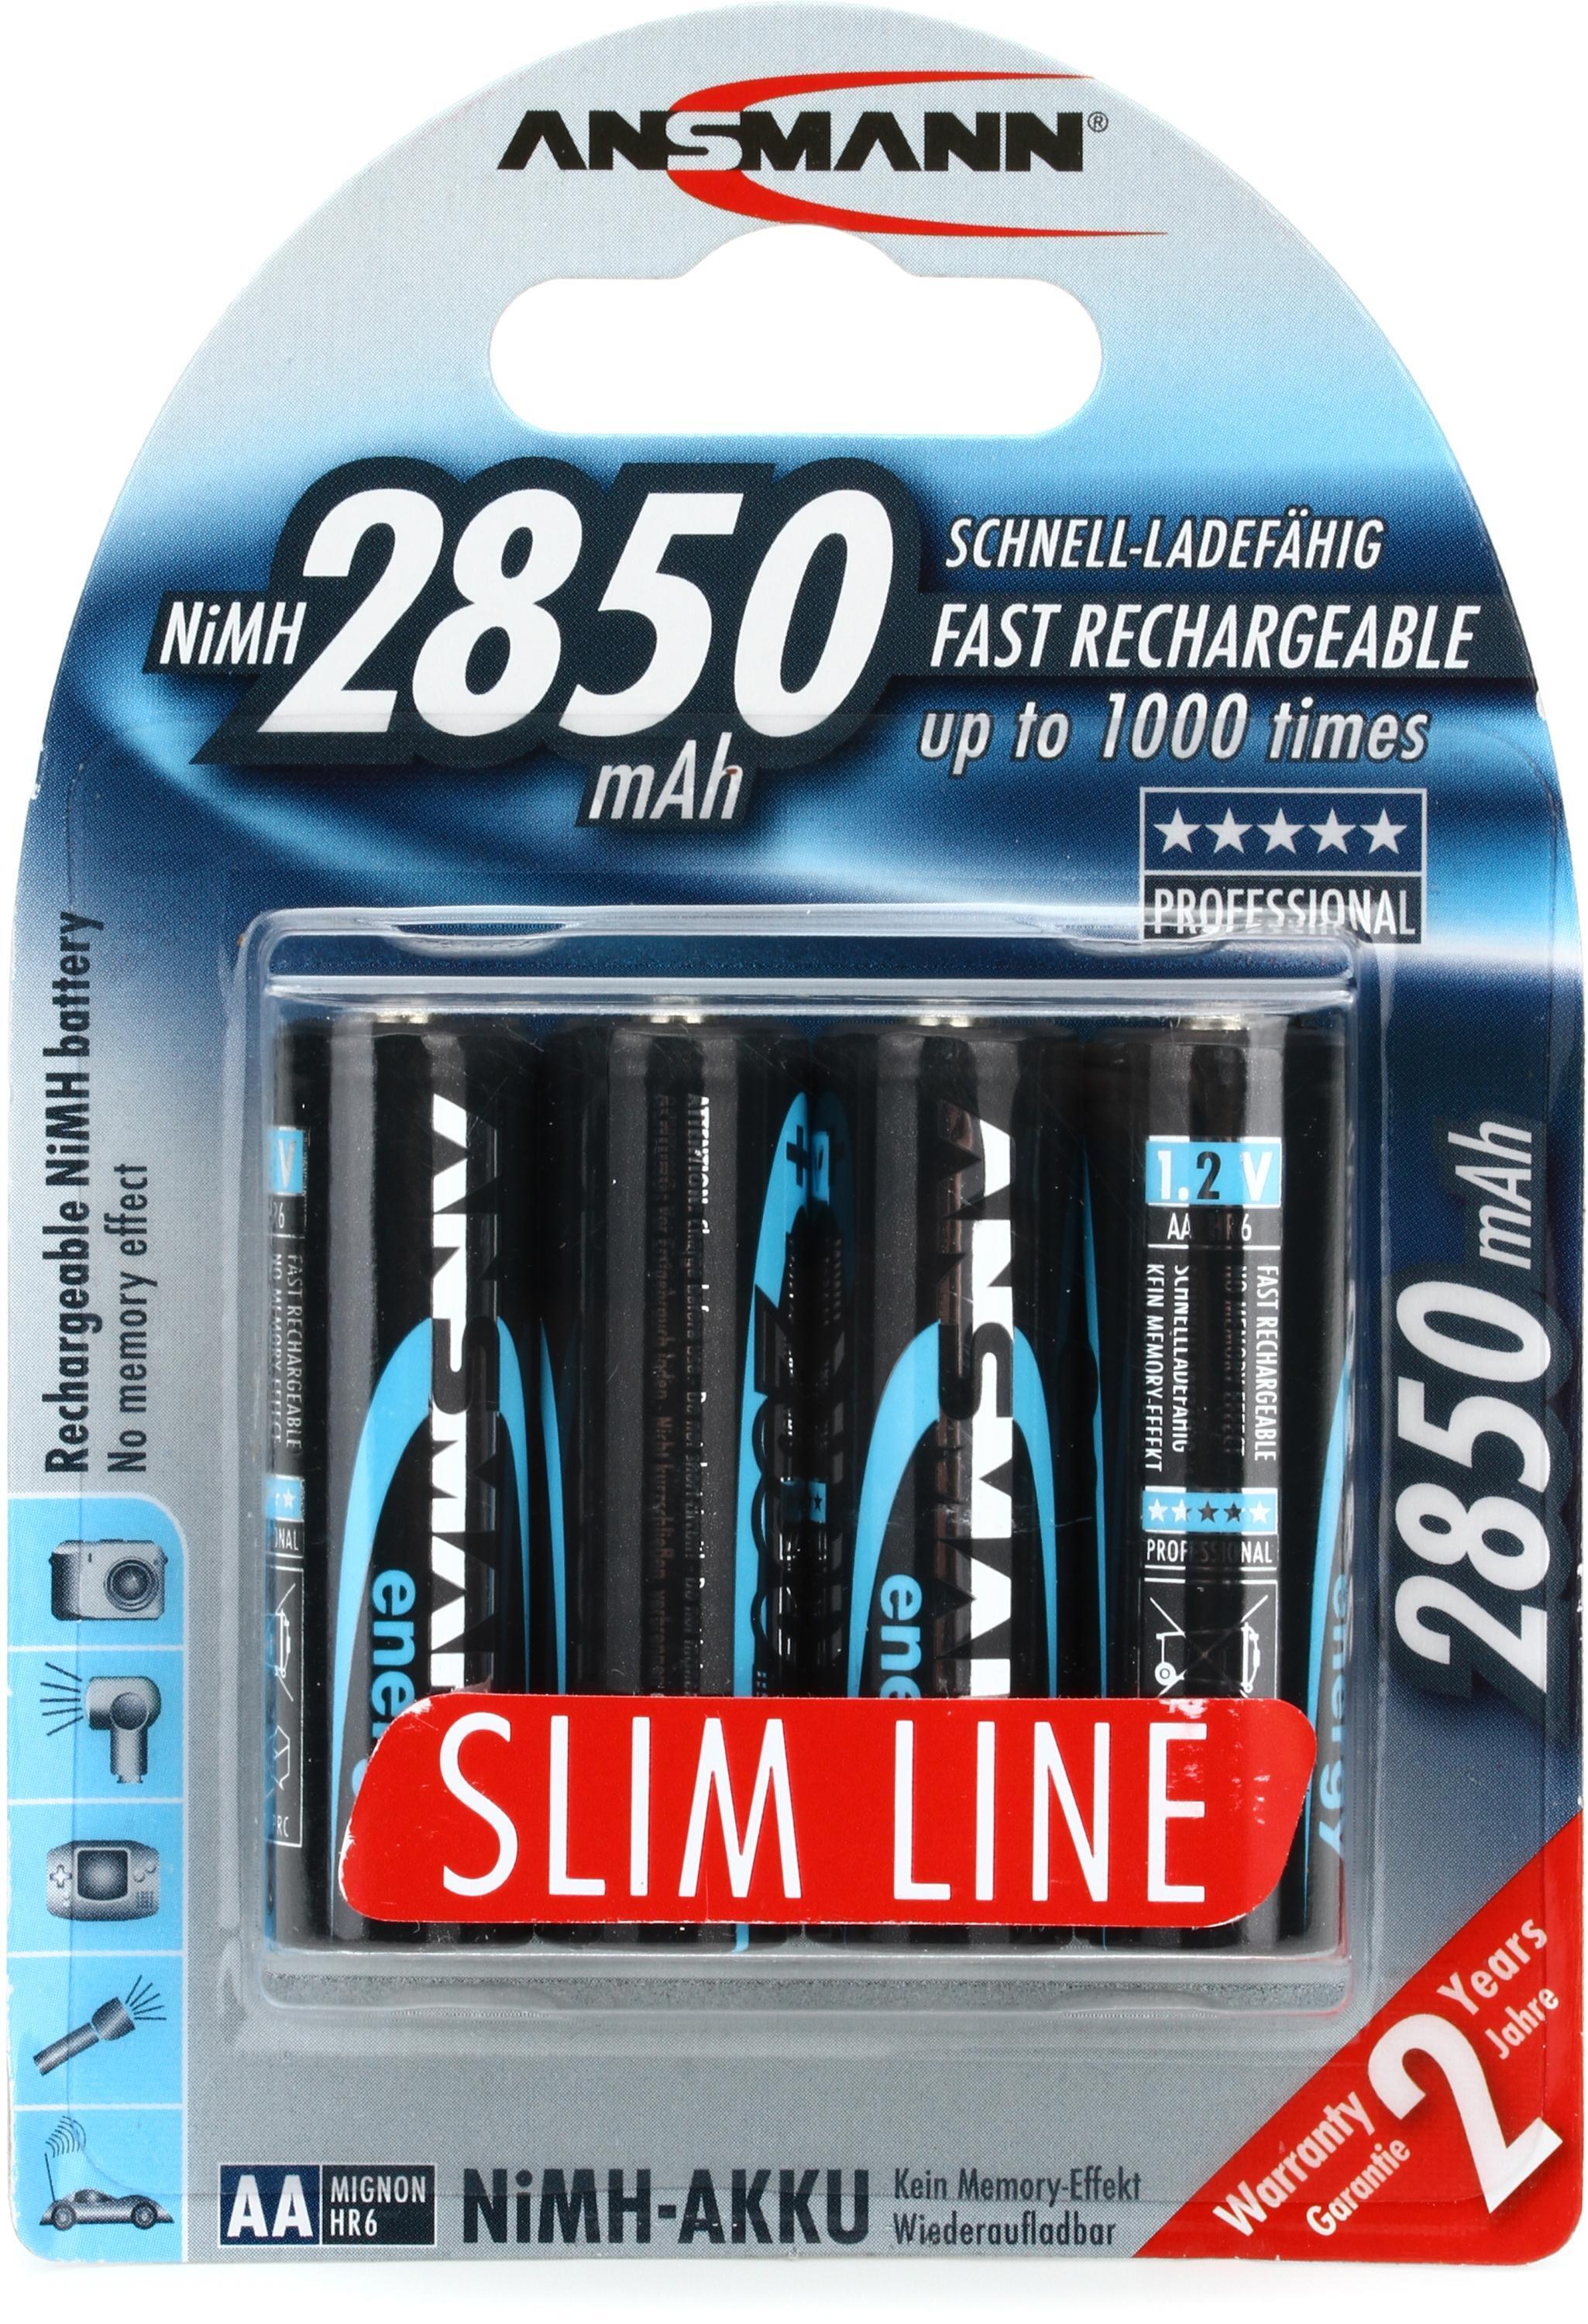 Bundled Item: Ansmann AA 2850mah Slimline Rechargeable NiMH Battery (4-pack)